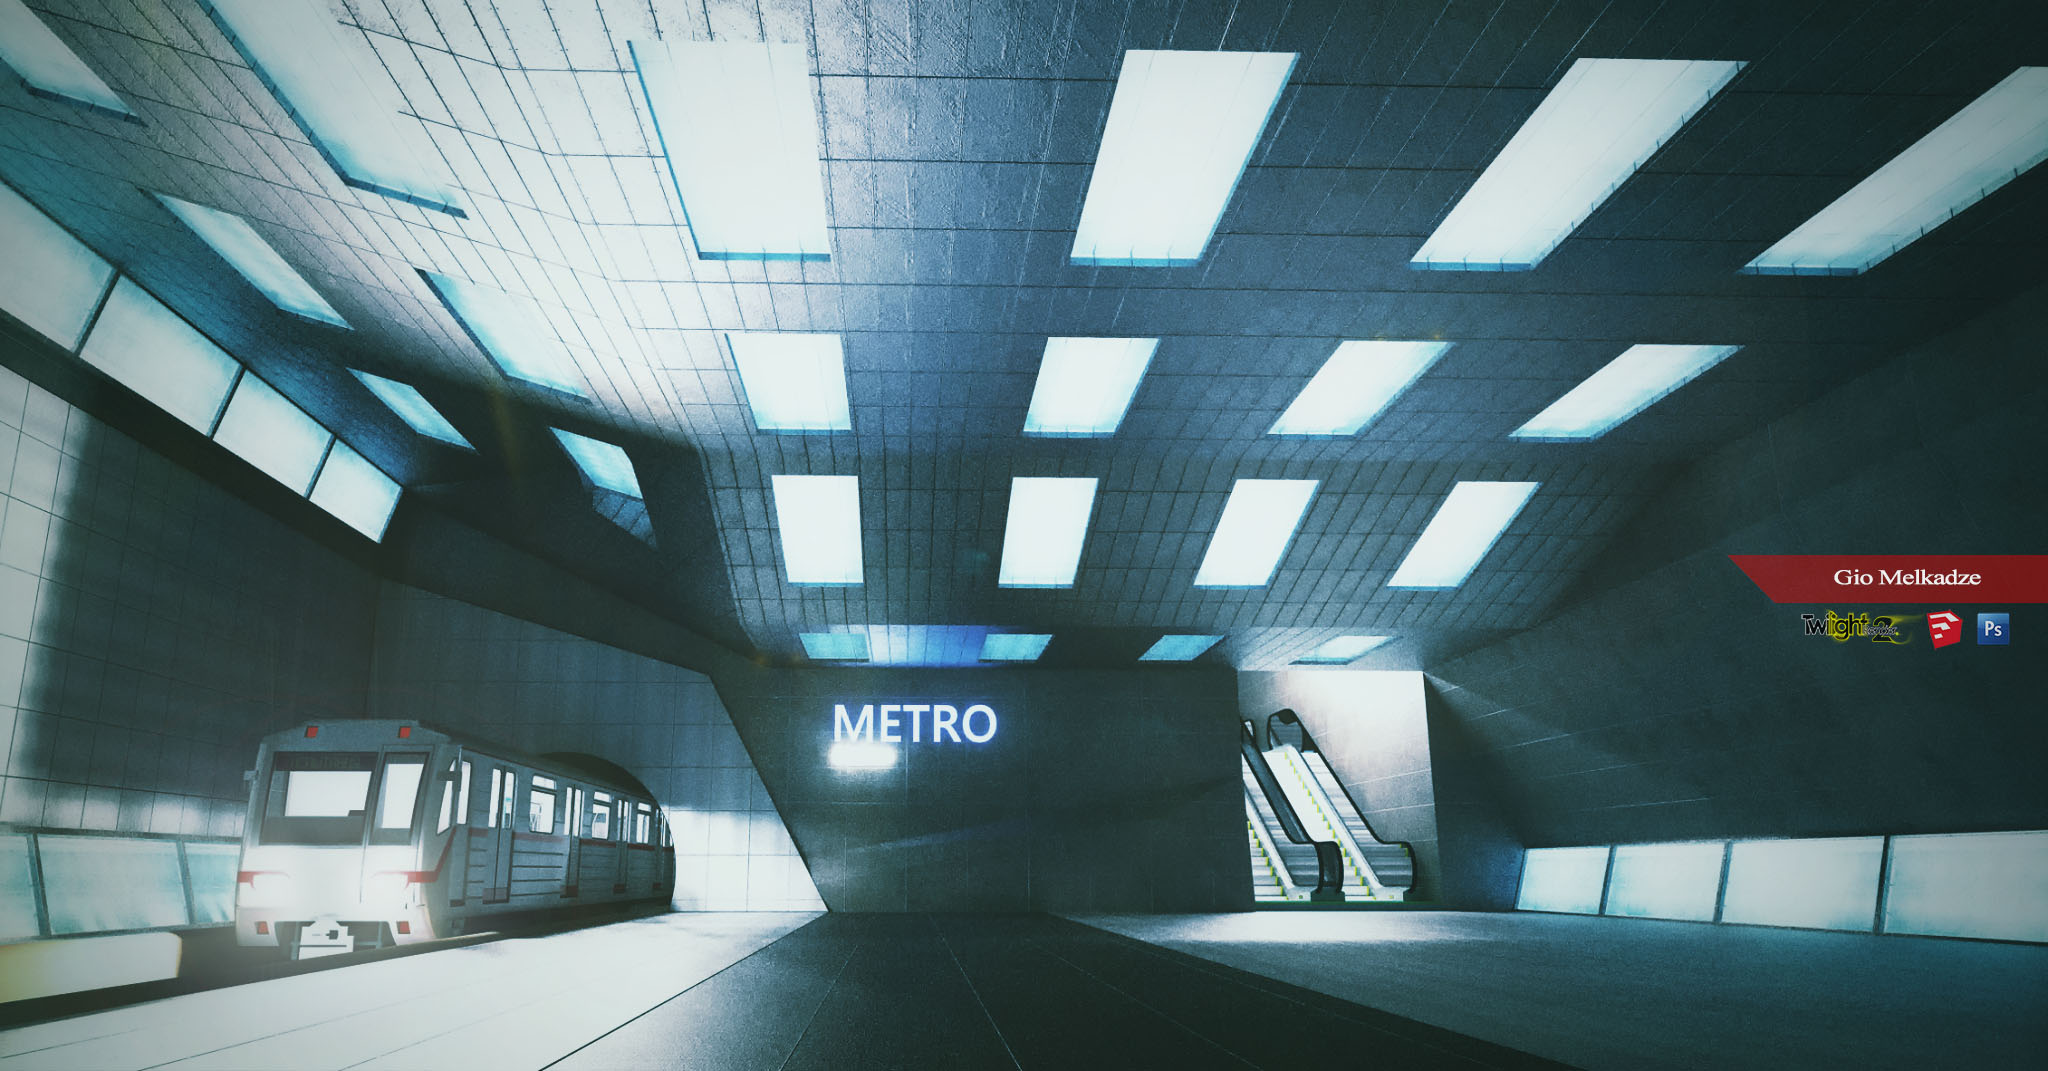 Metro sttion